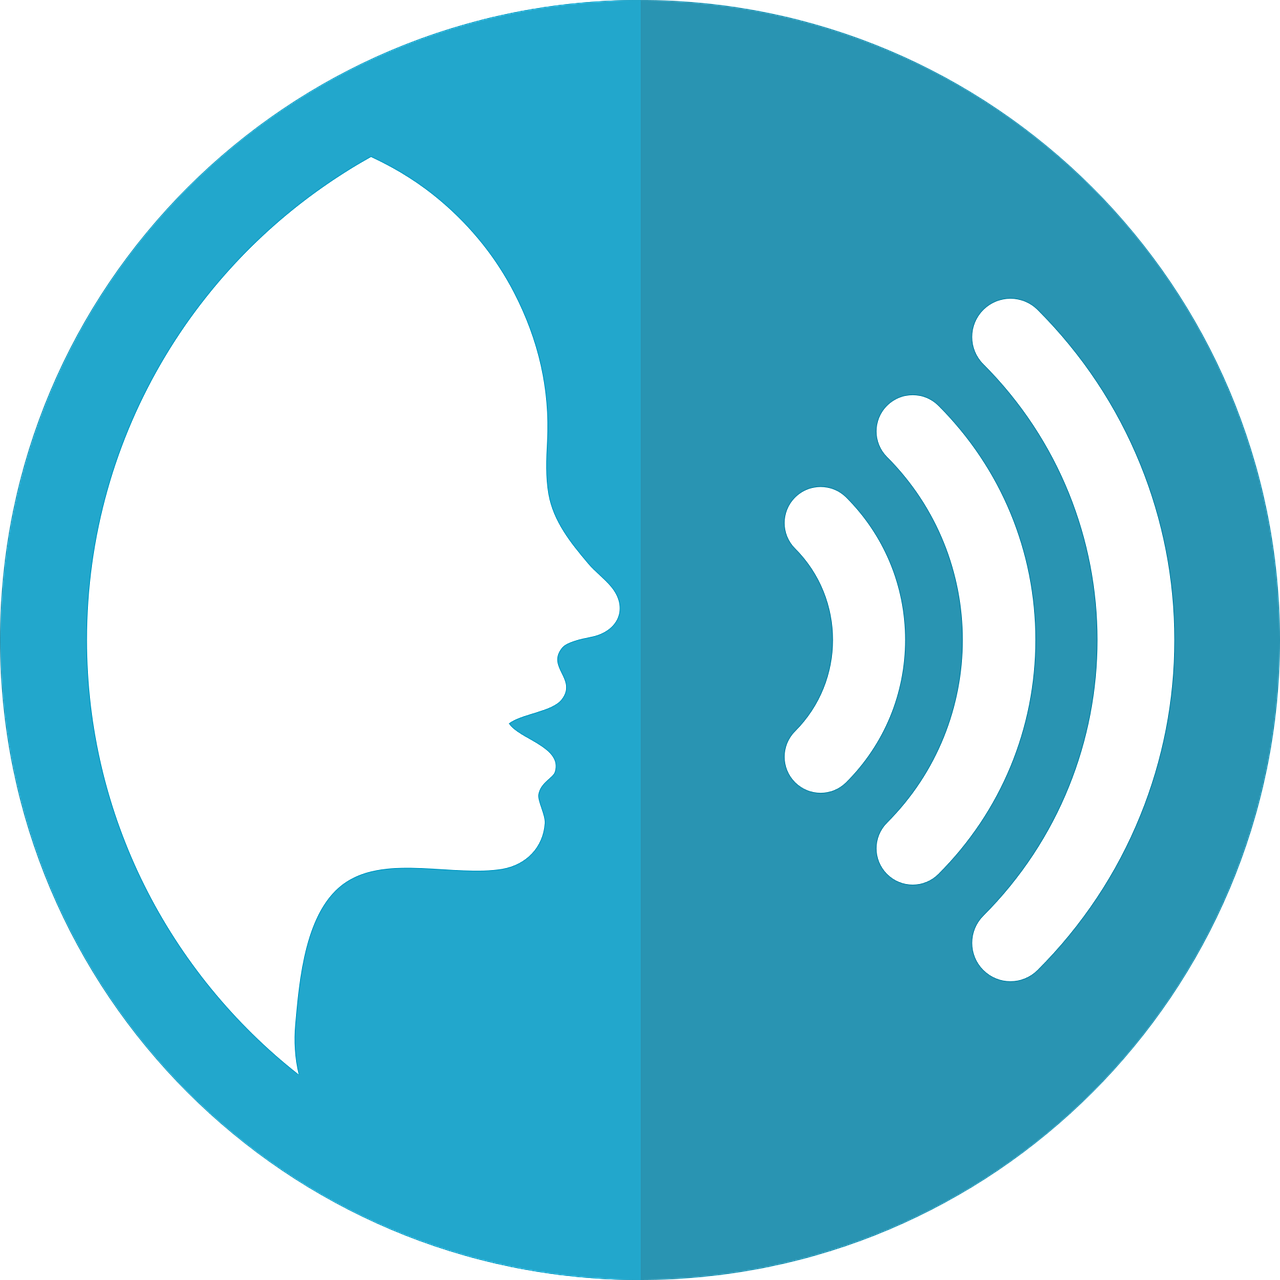 Download free photo of Speech icon,voice,talking,audio,speech - from needpix.com